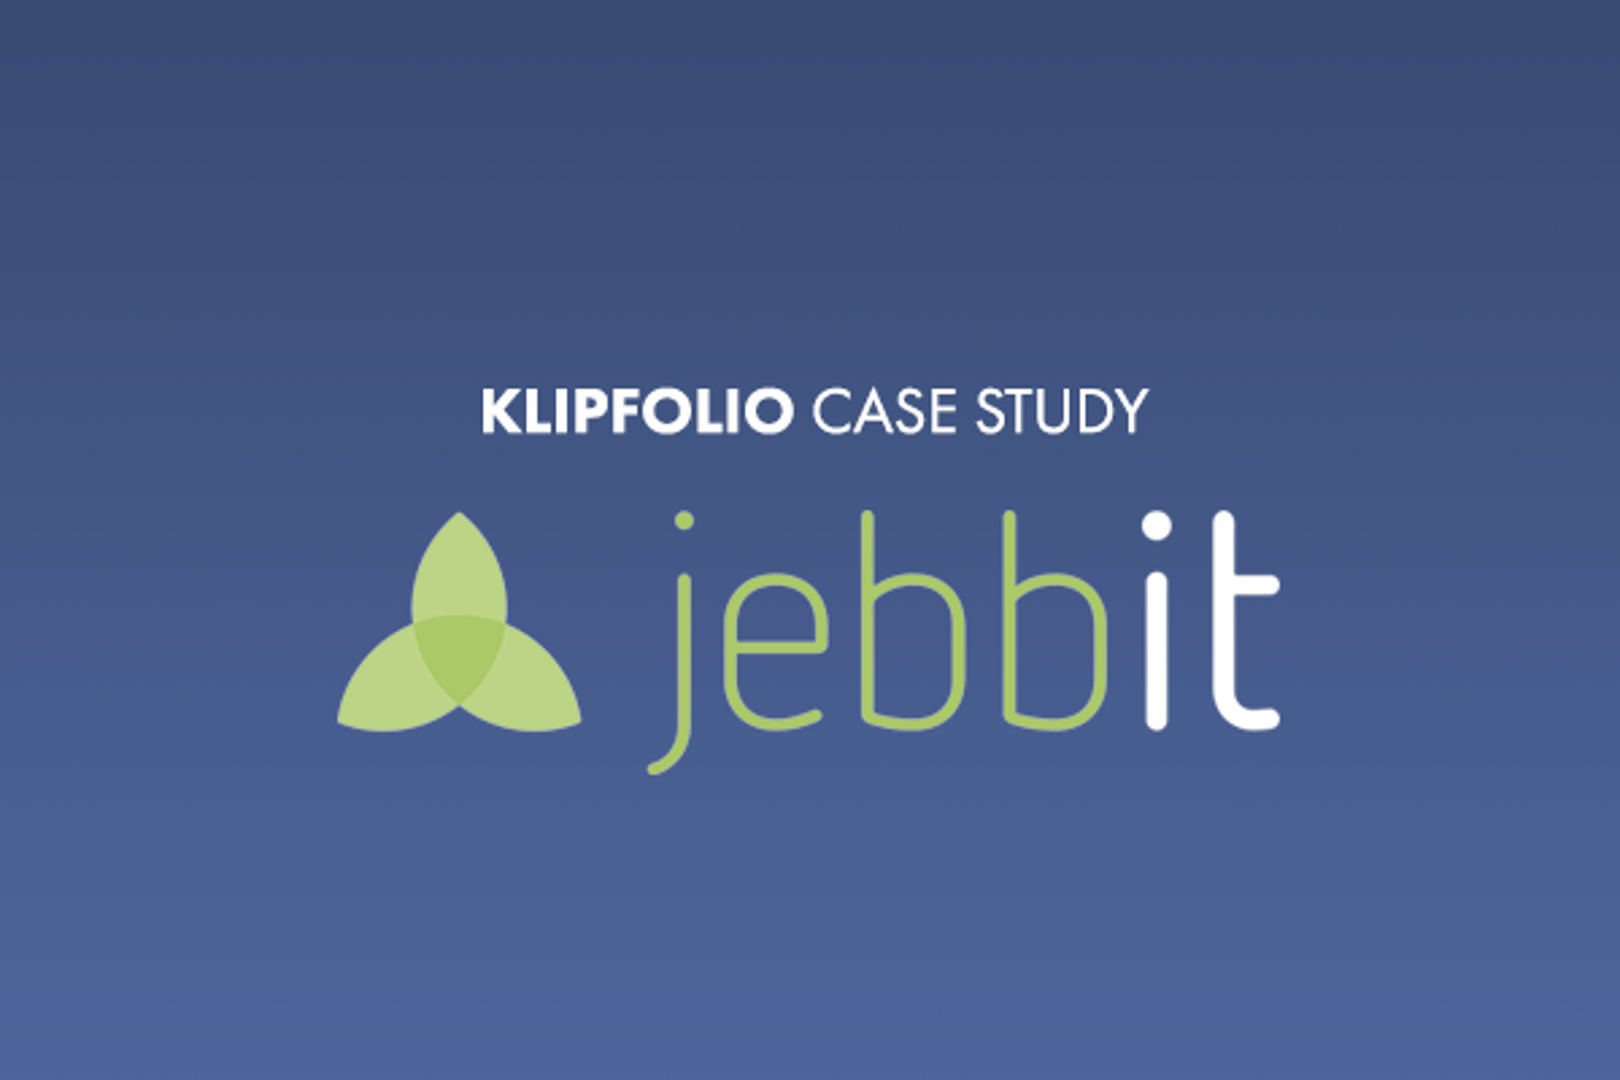 Jebbit Klipfolio Case Study